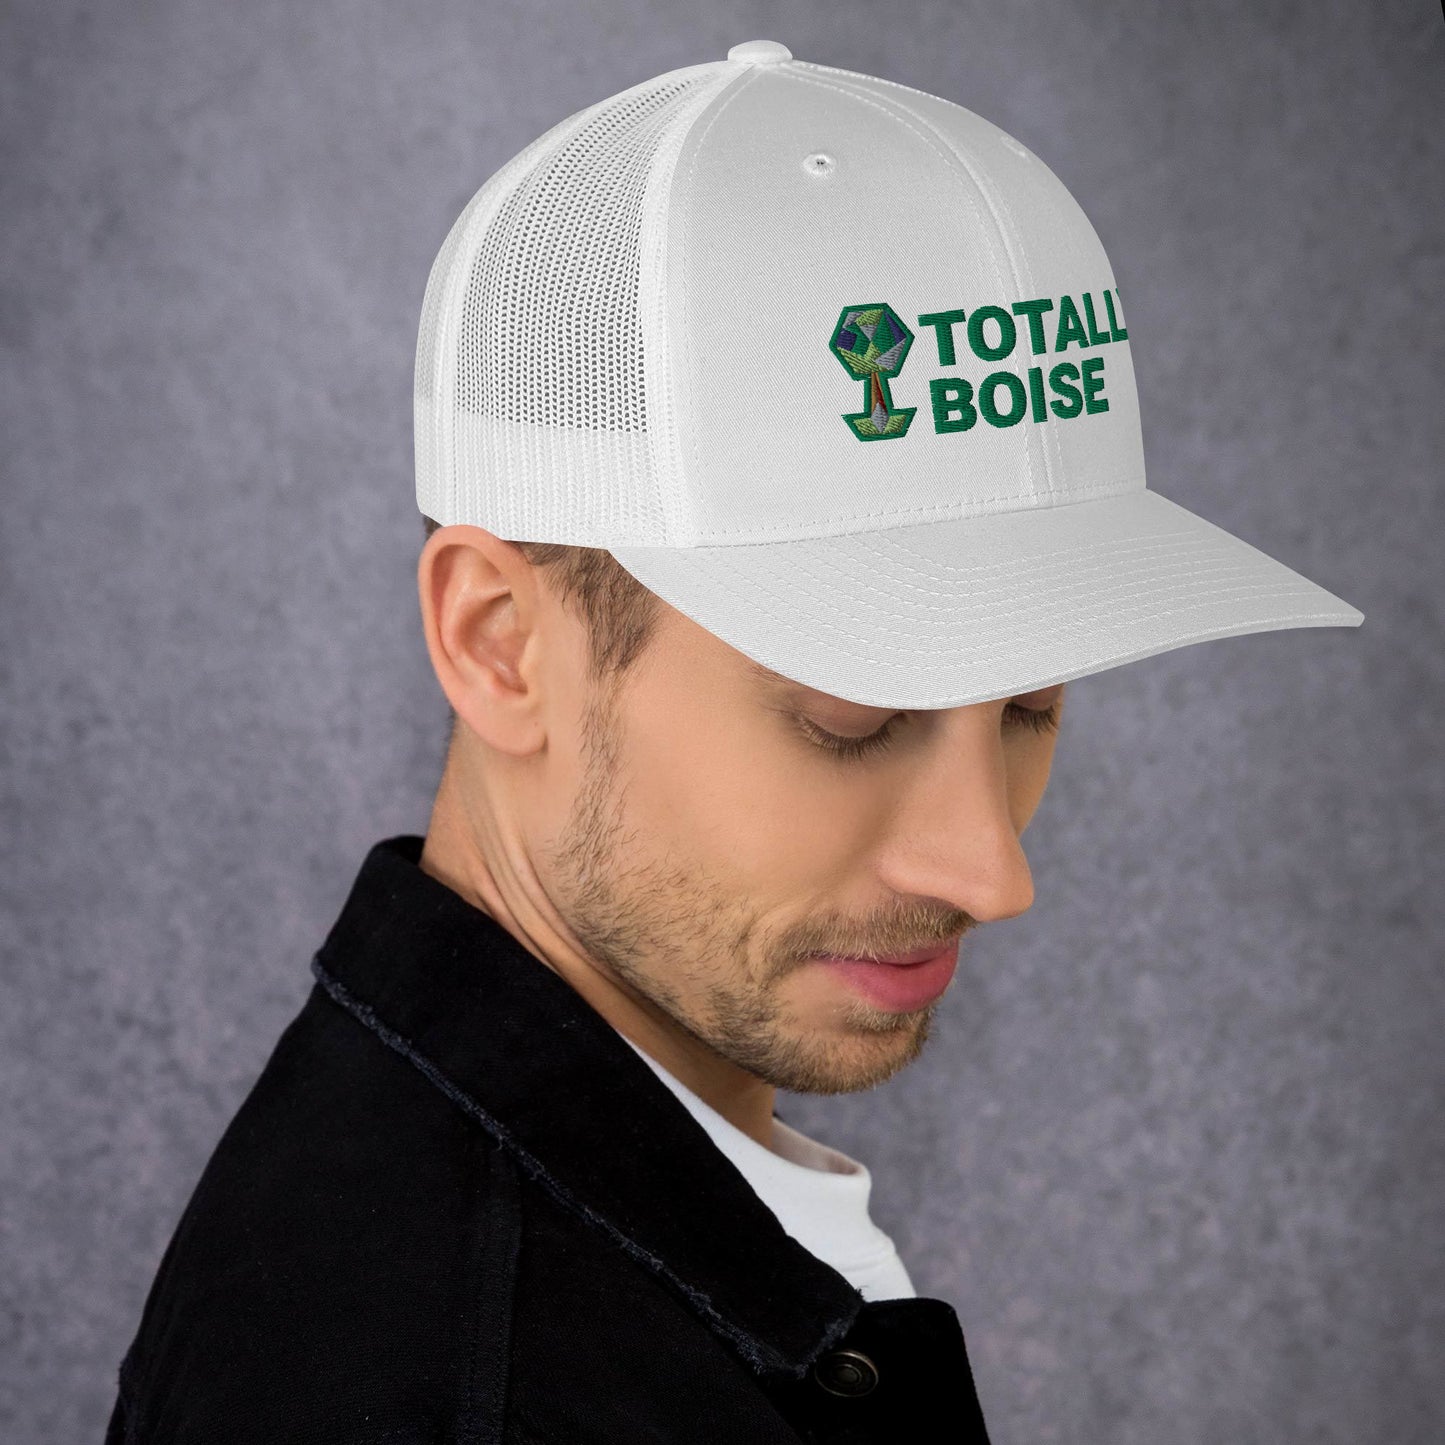 Totally Boise Trucker Style Hat